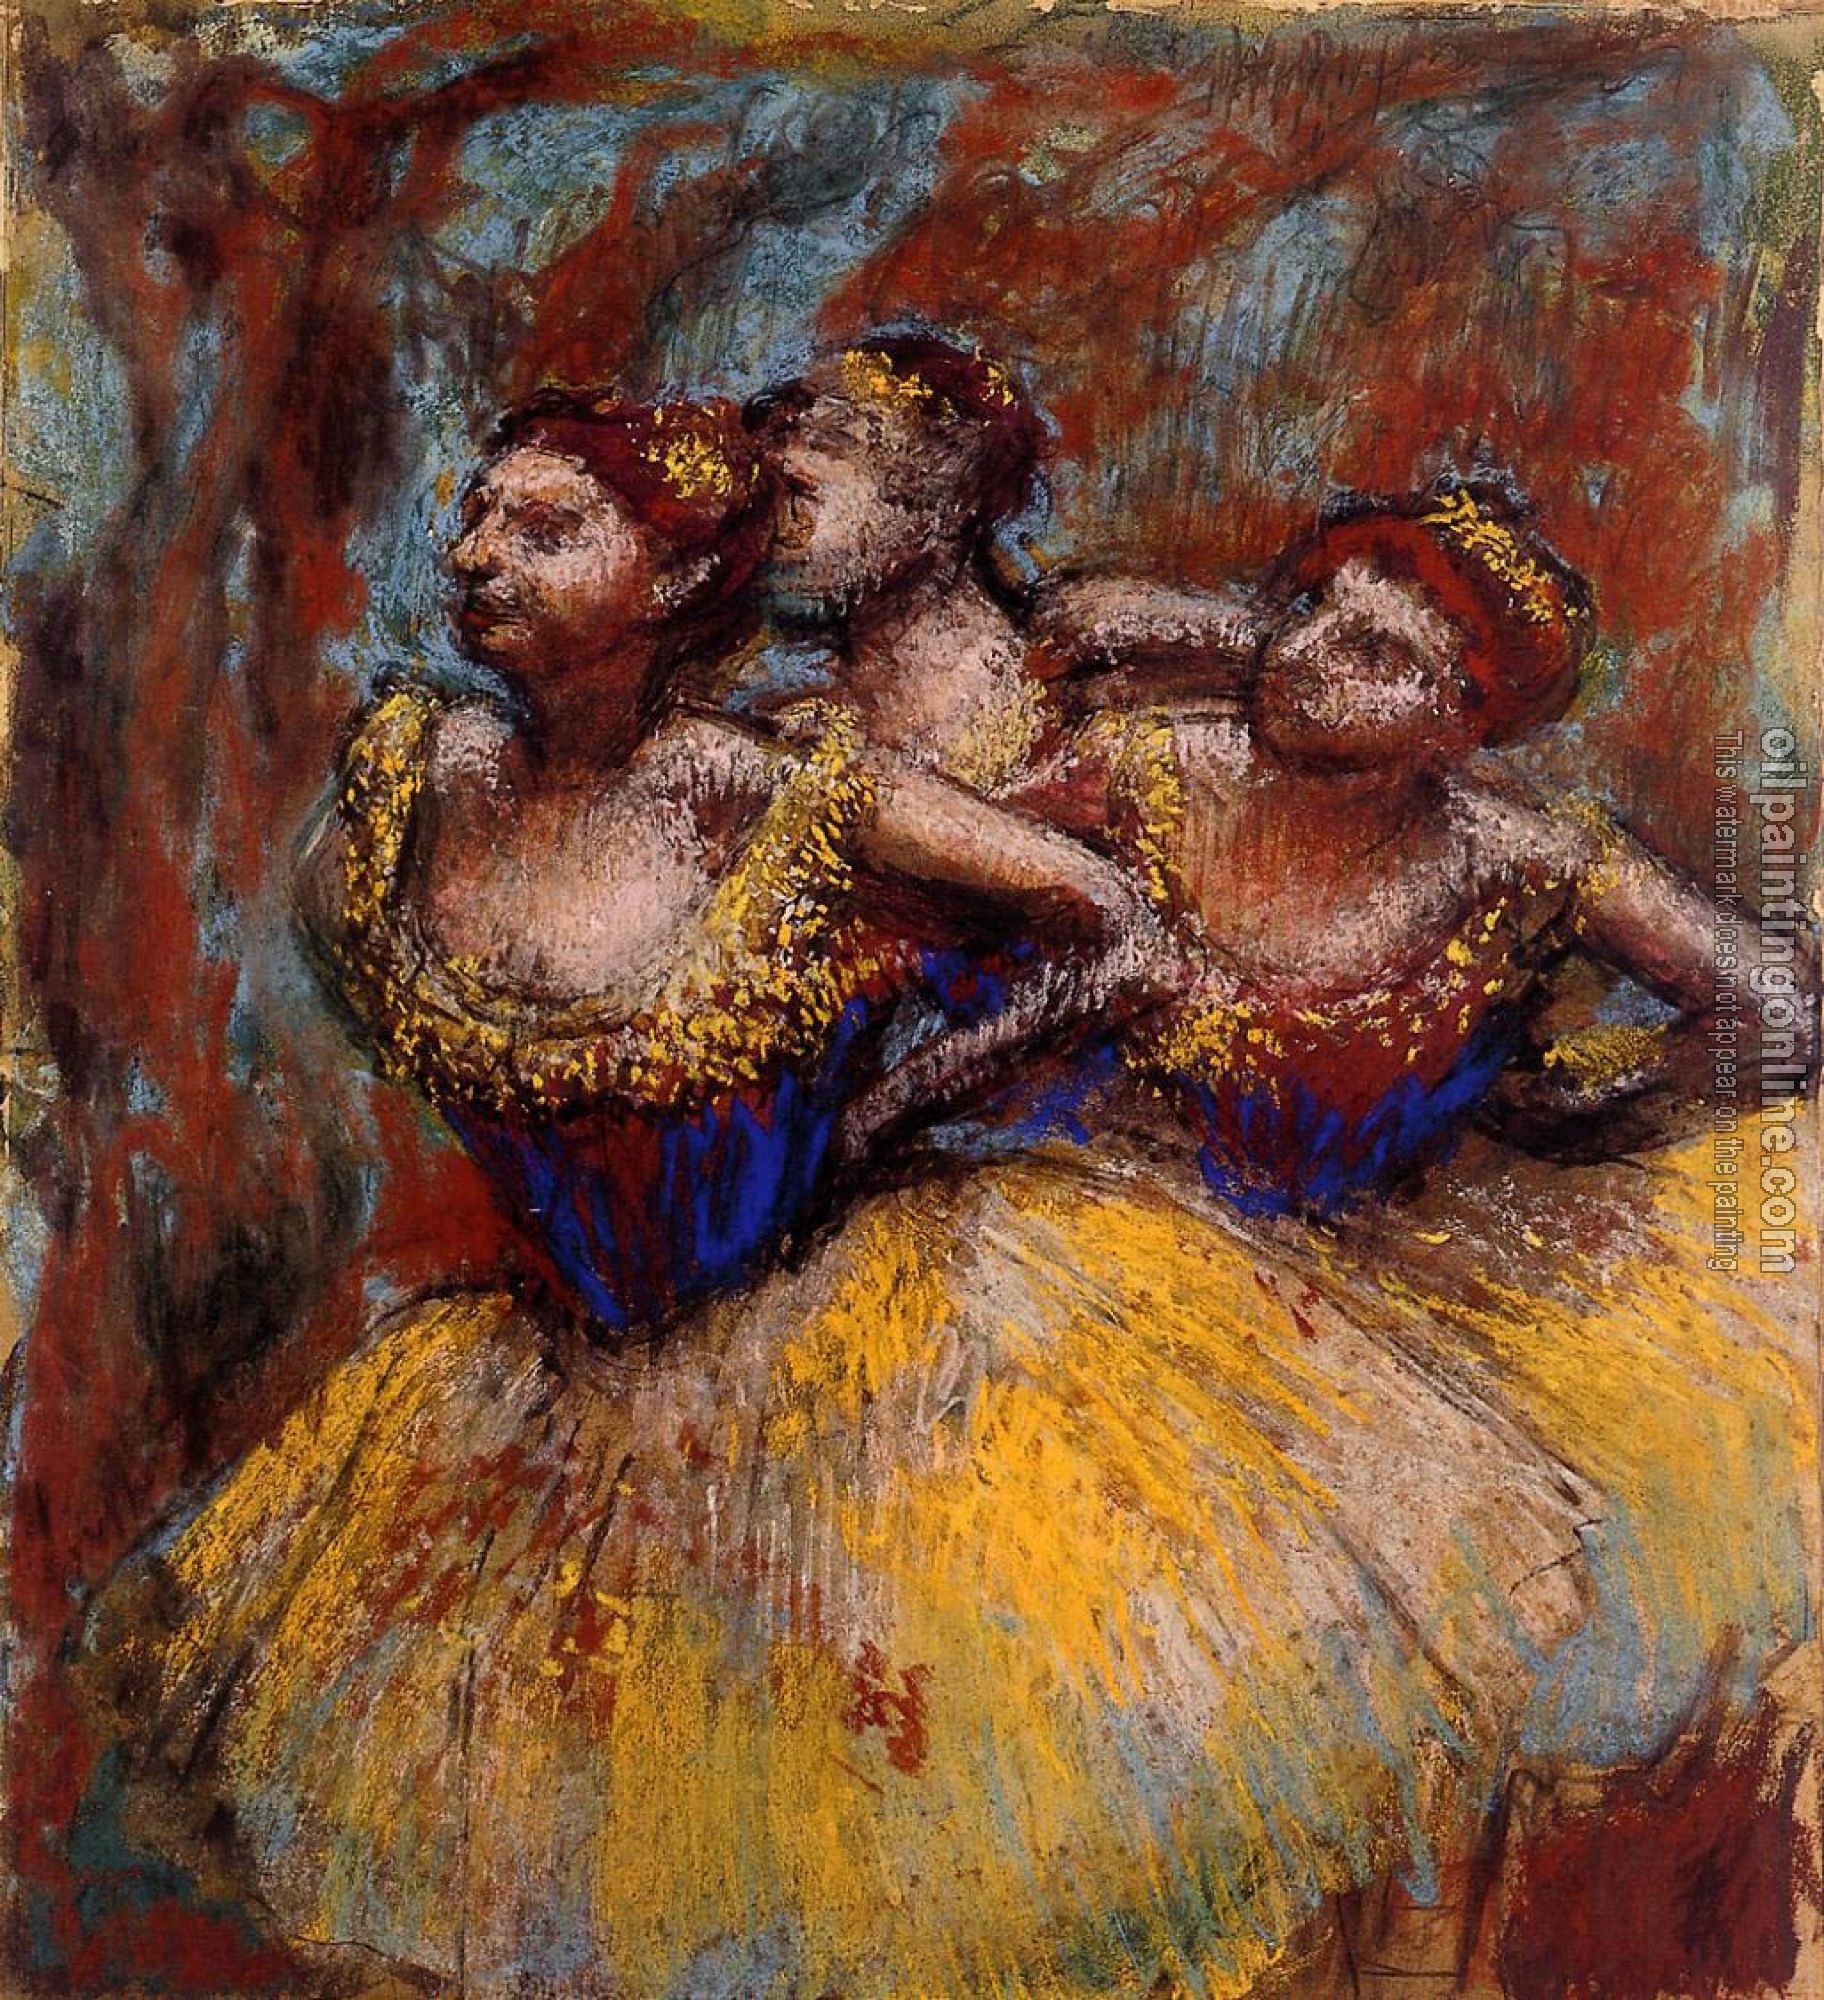 Degas, Edgar - Three Dancers   Yellow Skirts, Blue Blouses